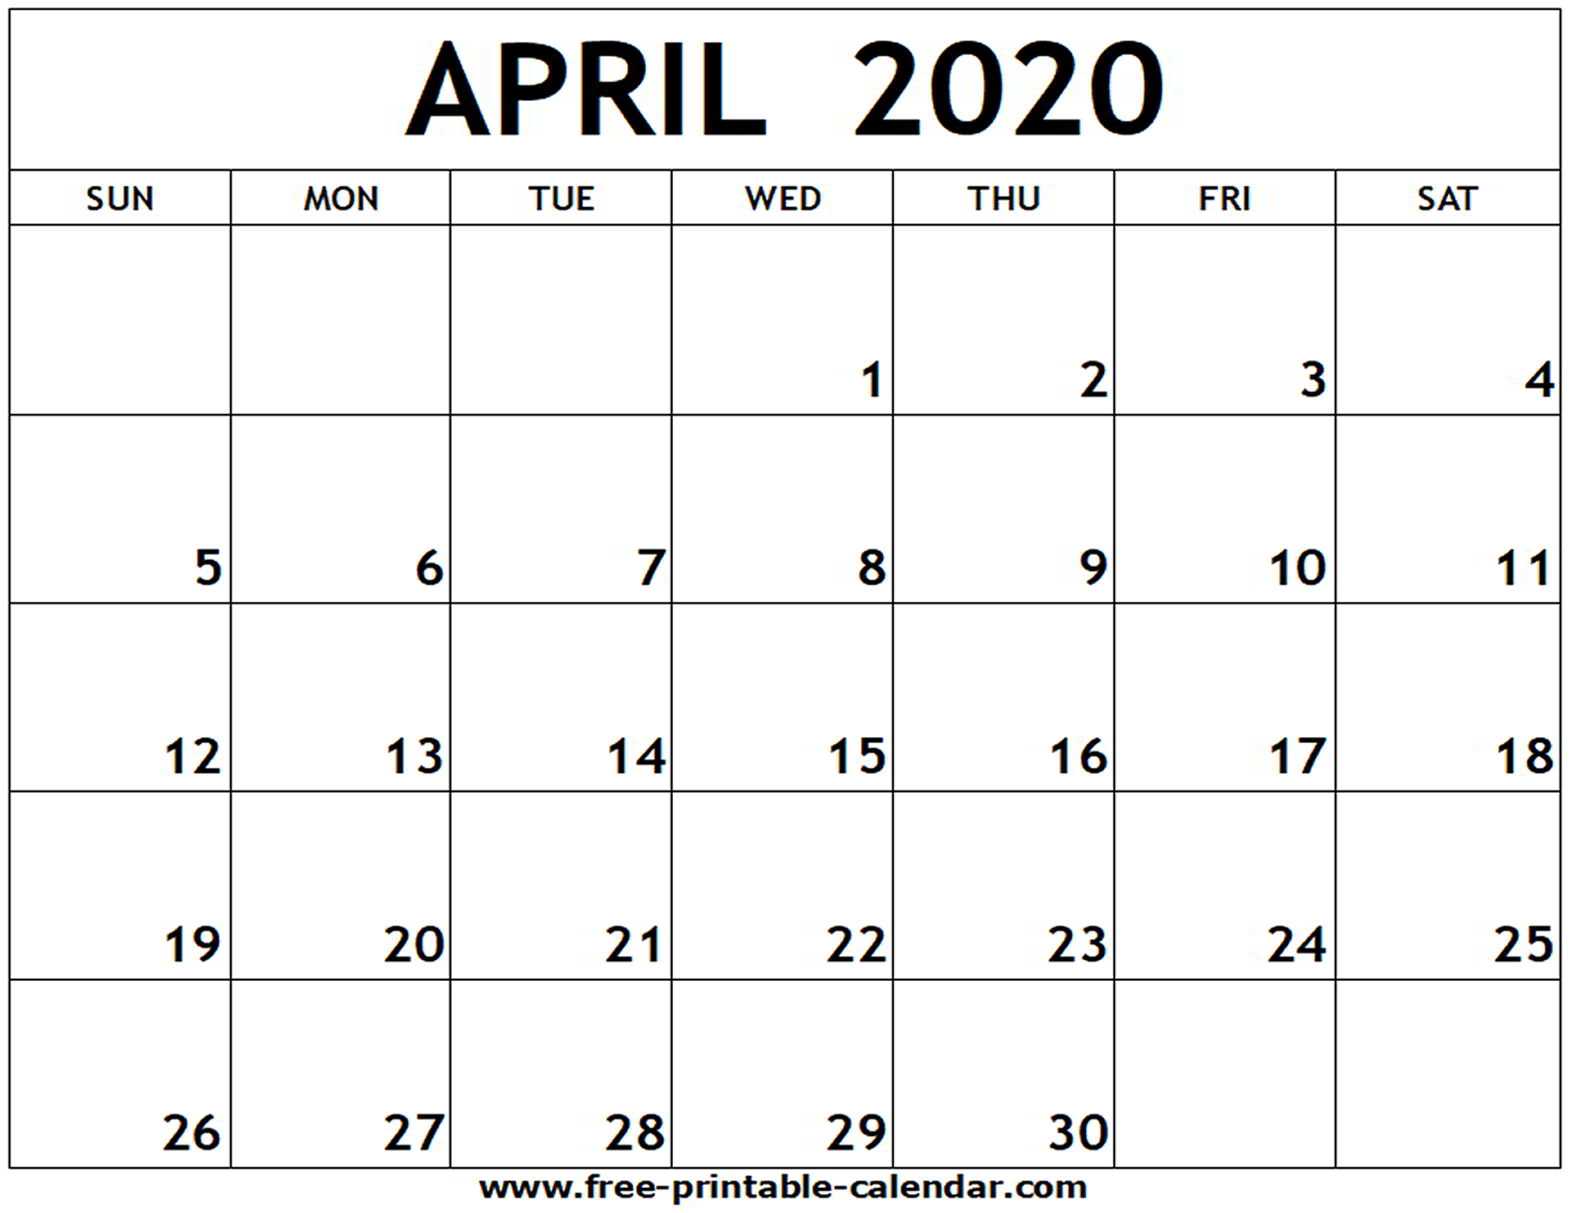 April 2020 Printable Calendar – Free Printable Calendar In Blank Calander Template